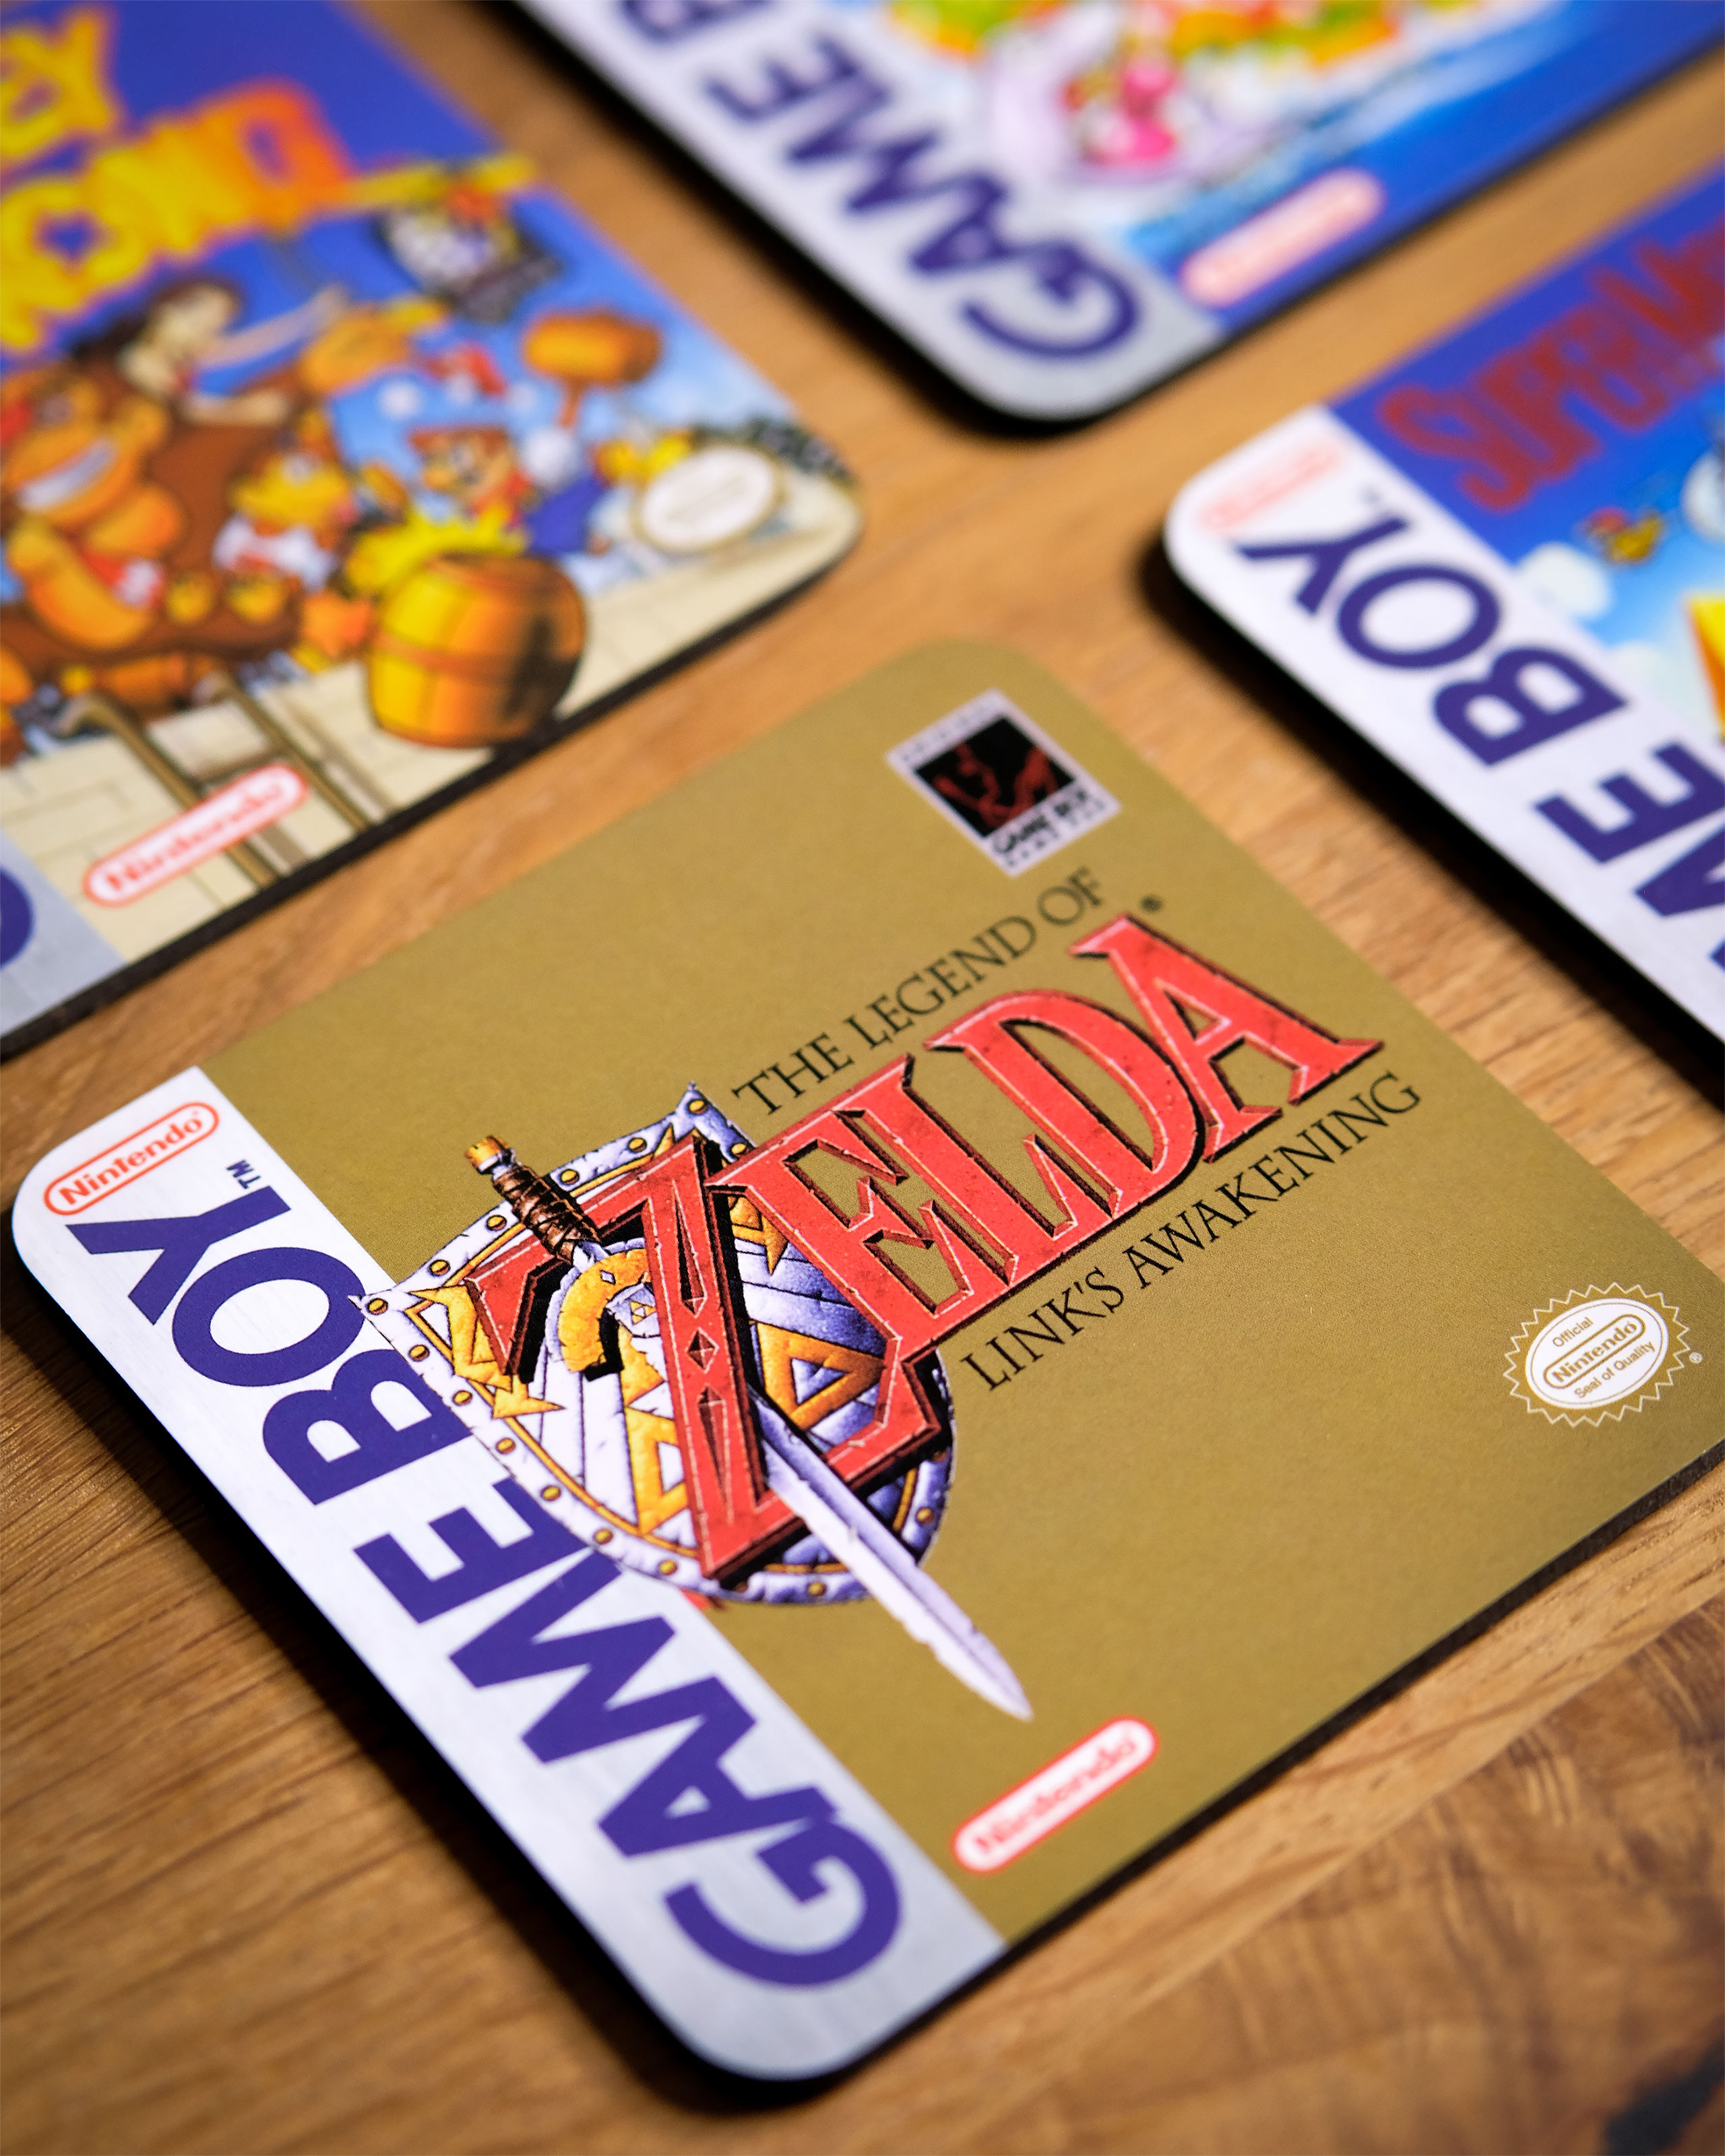 Nintendo - Game Boy Classic Games Coaster Set of 4